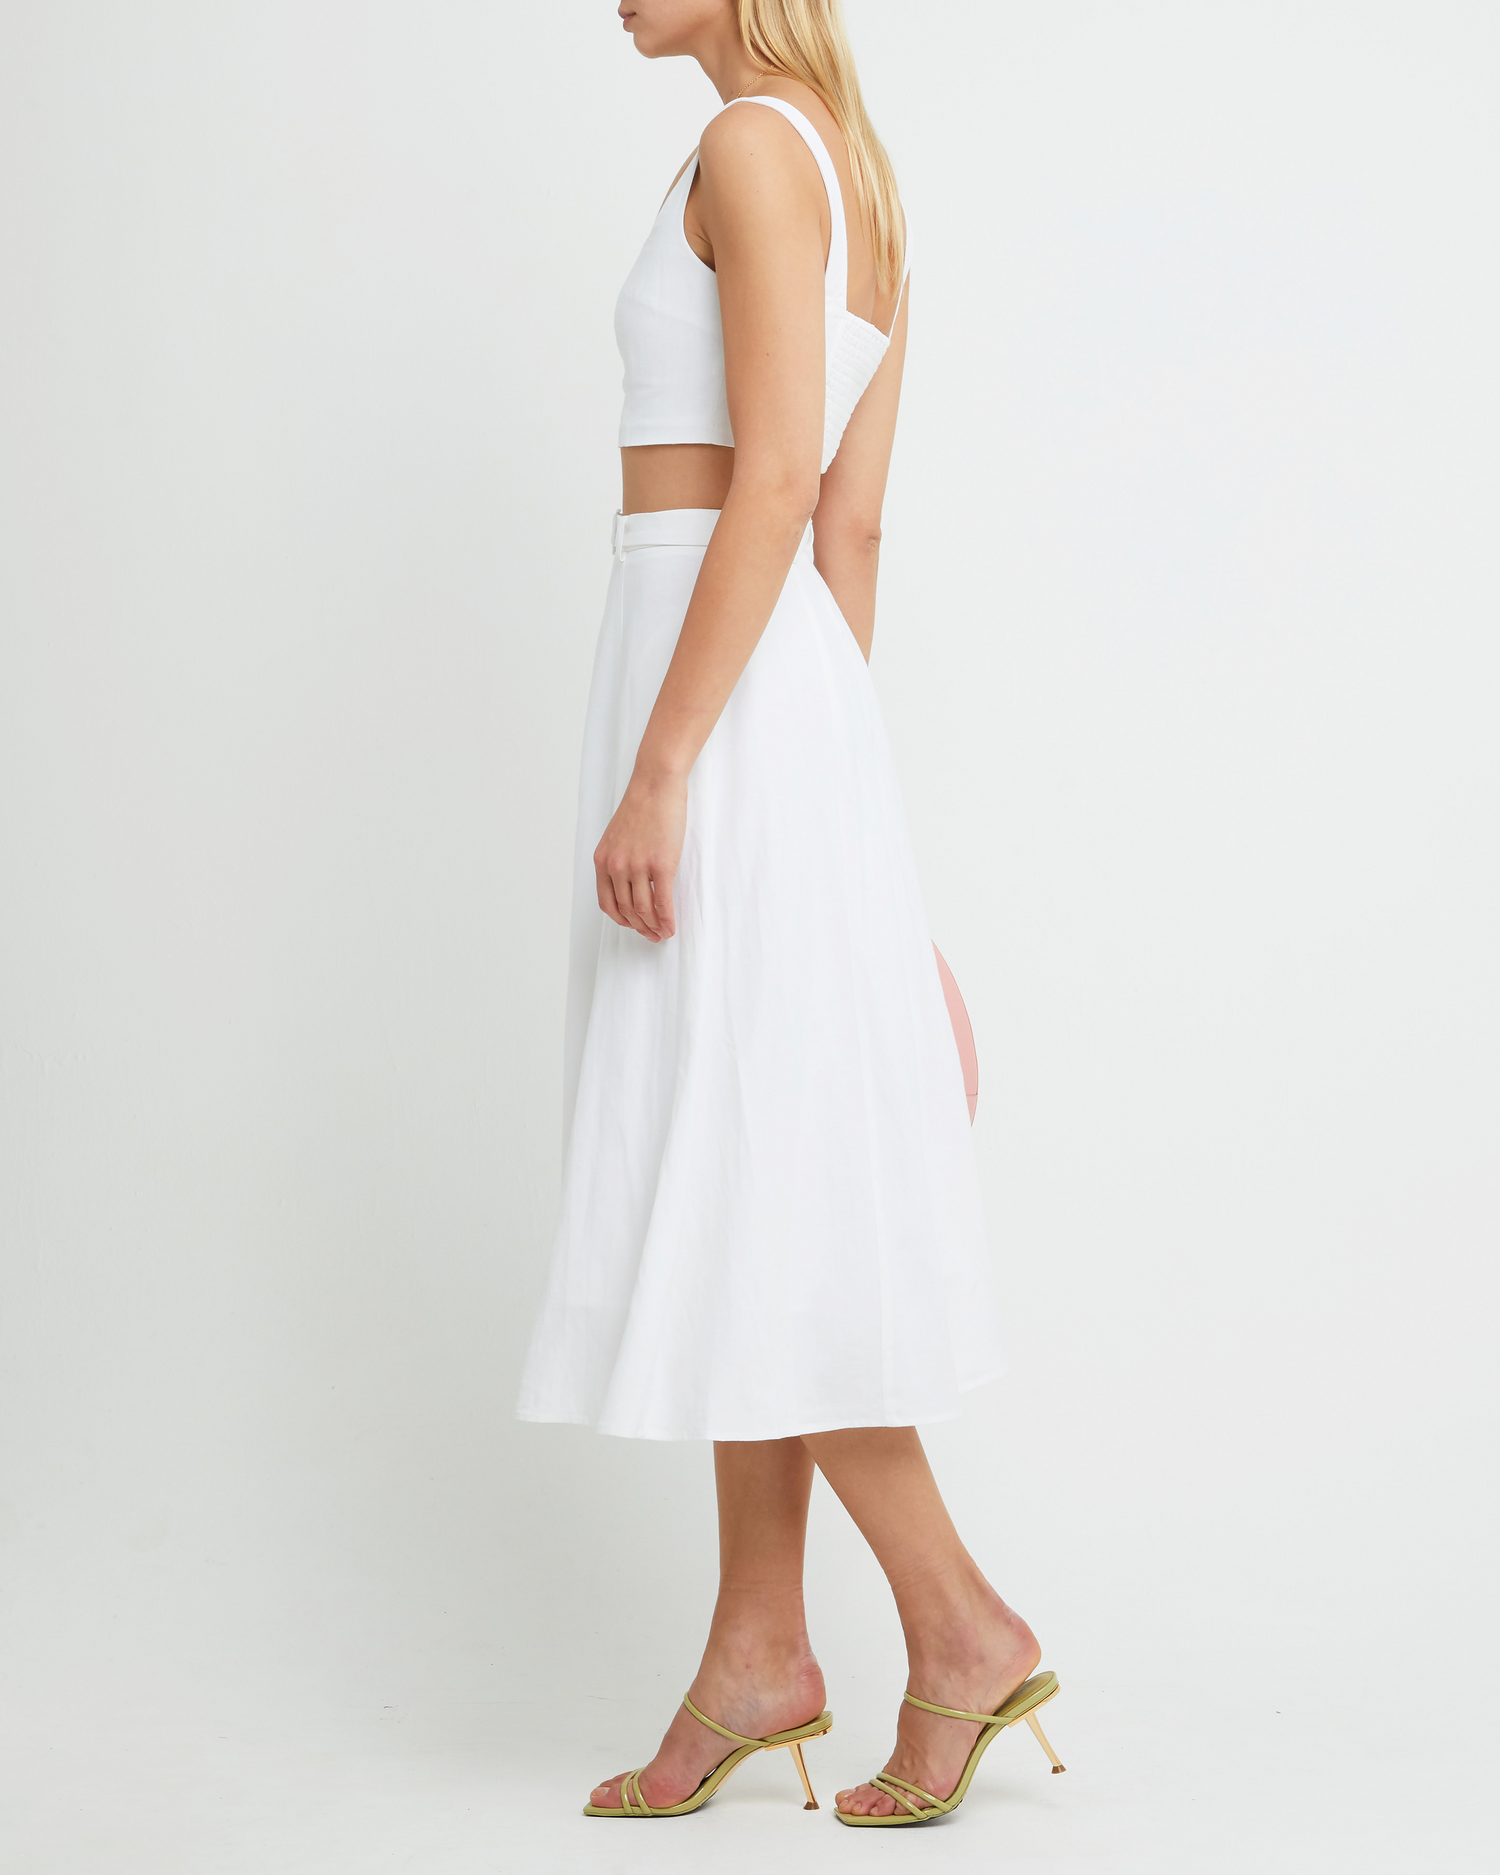 Third image of Samara Set, a white top and maxi skirt, tank, seperates, square neckline